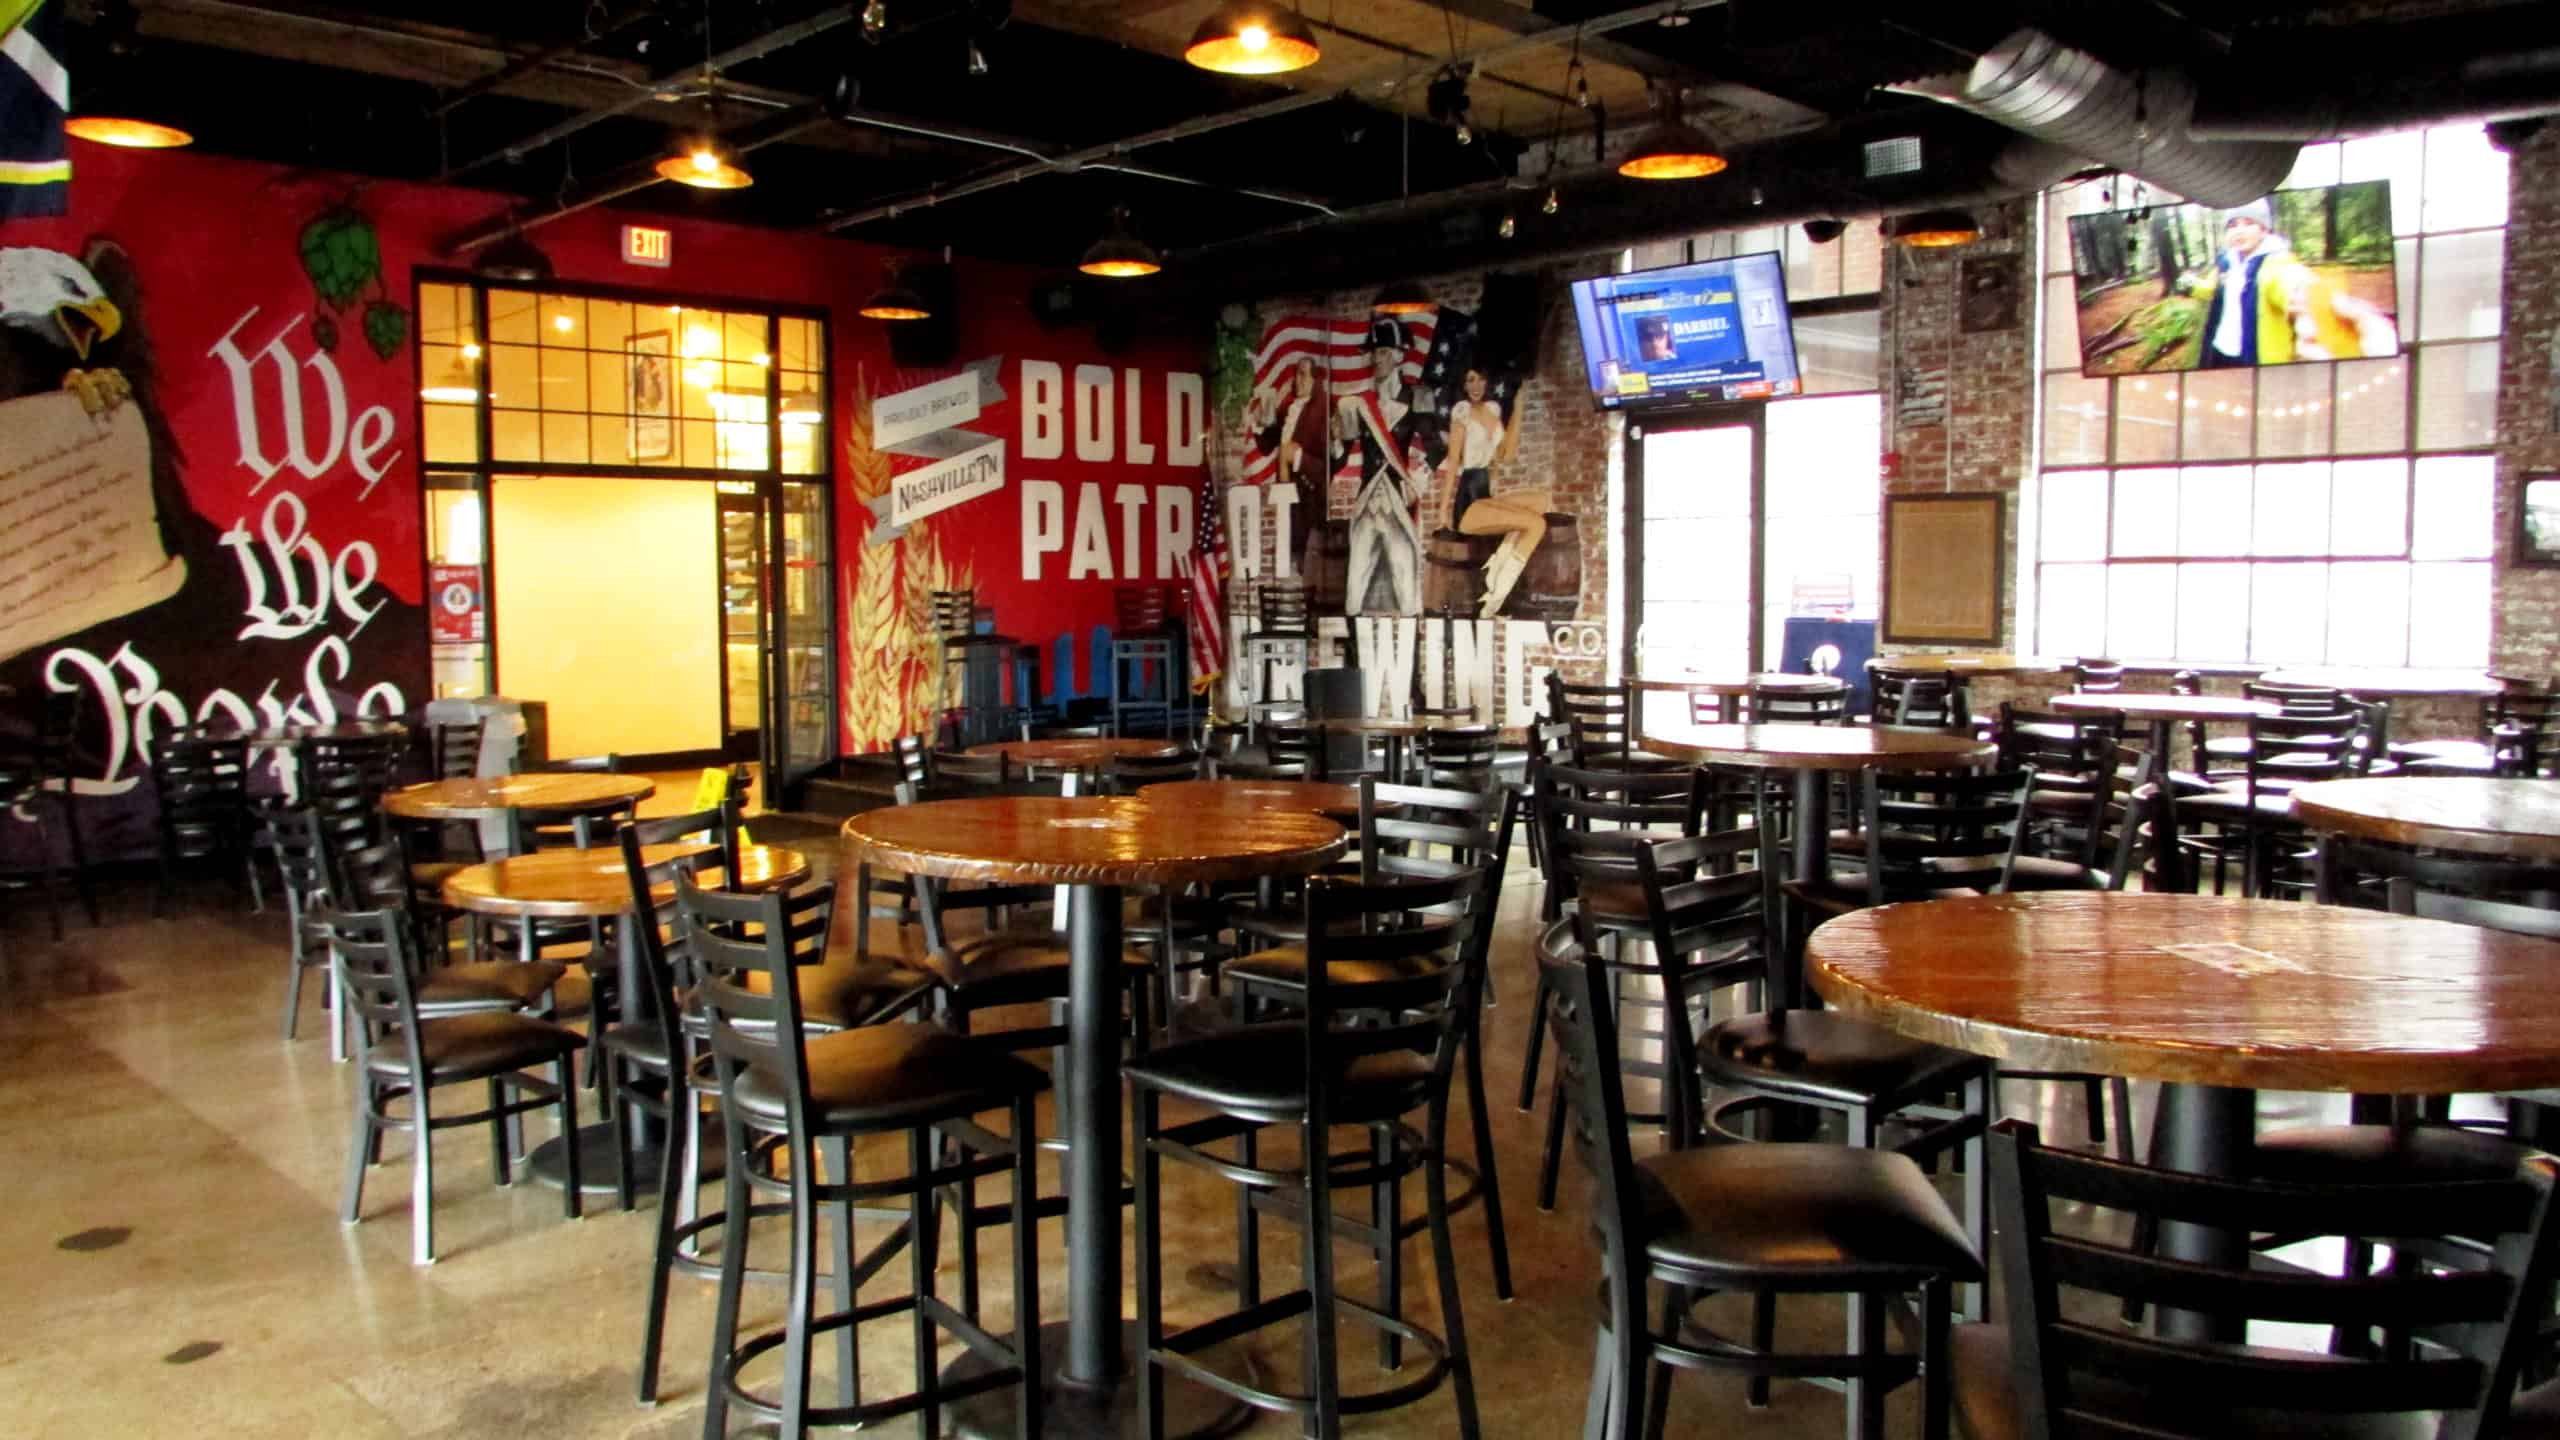 Bold Patriot Brewing interior dining area